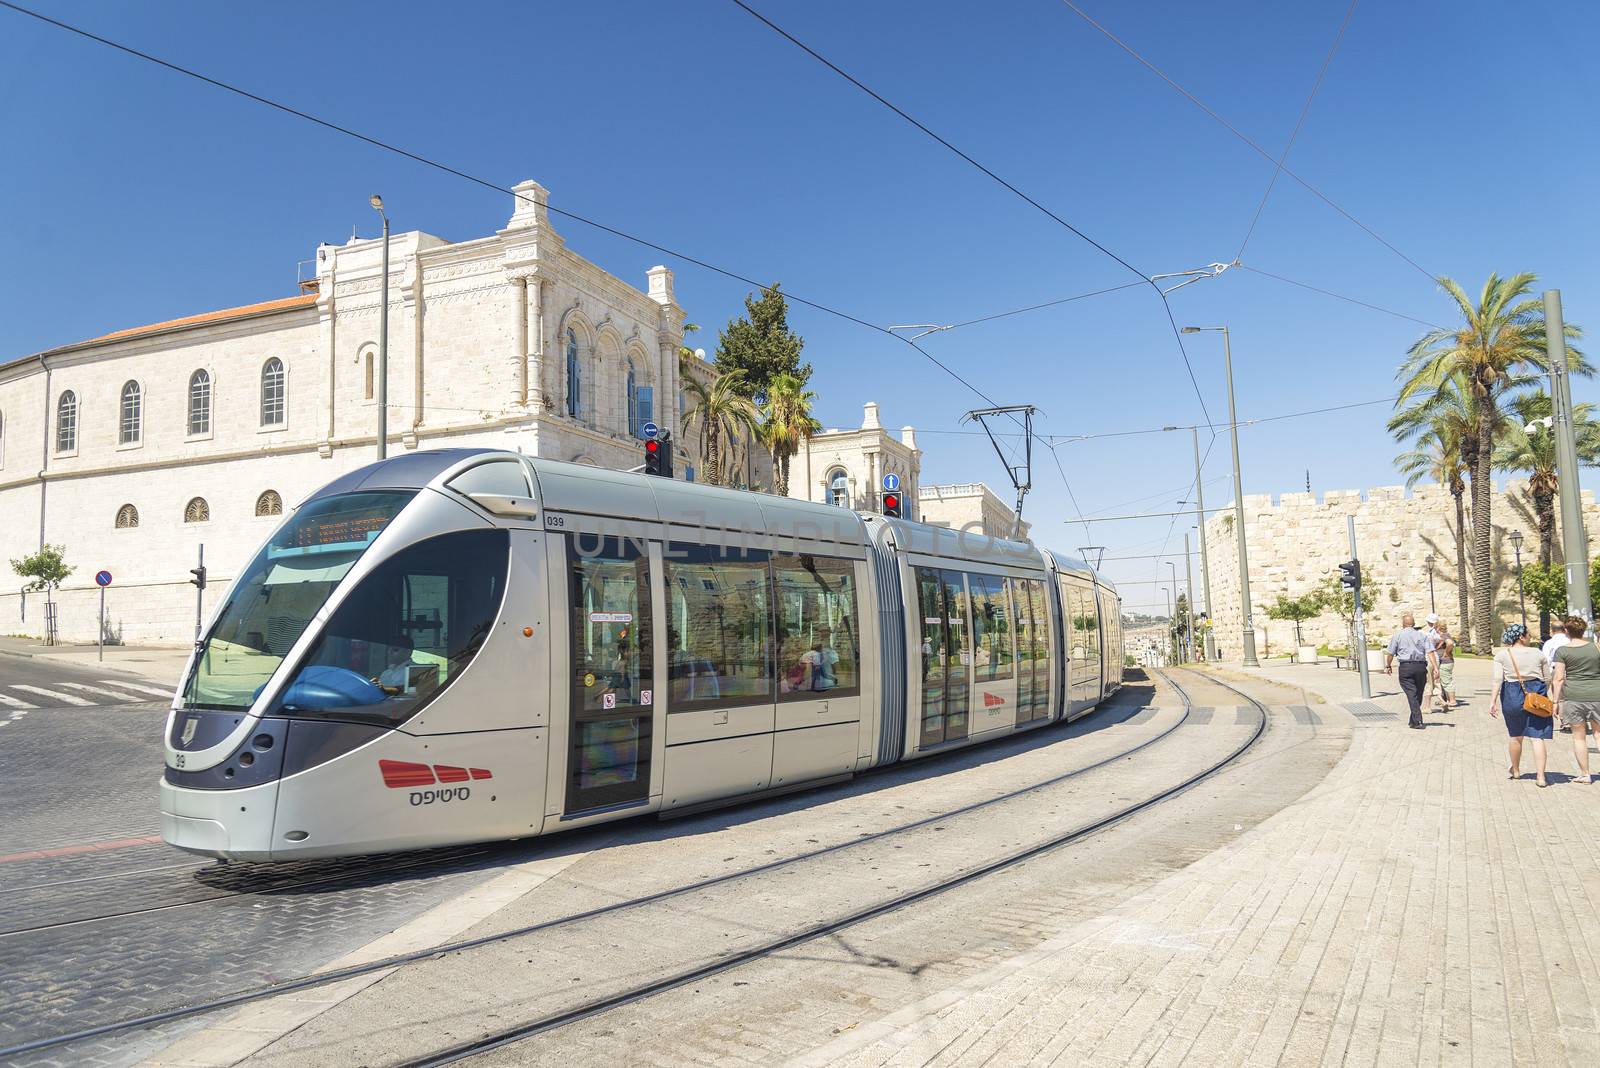 modern tram in central jerusalem in israel